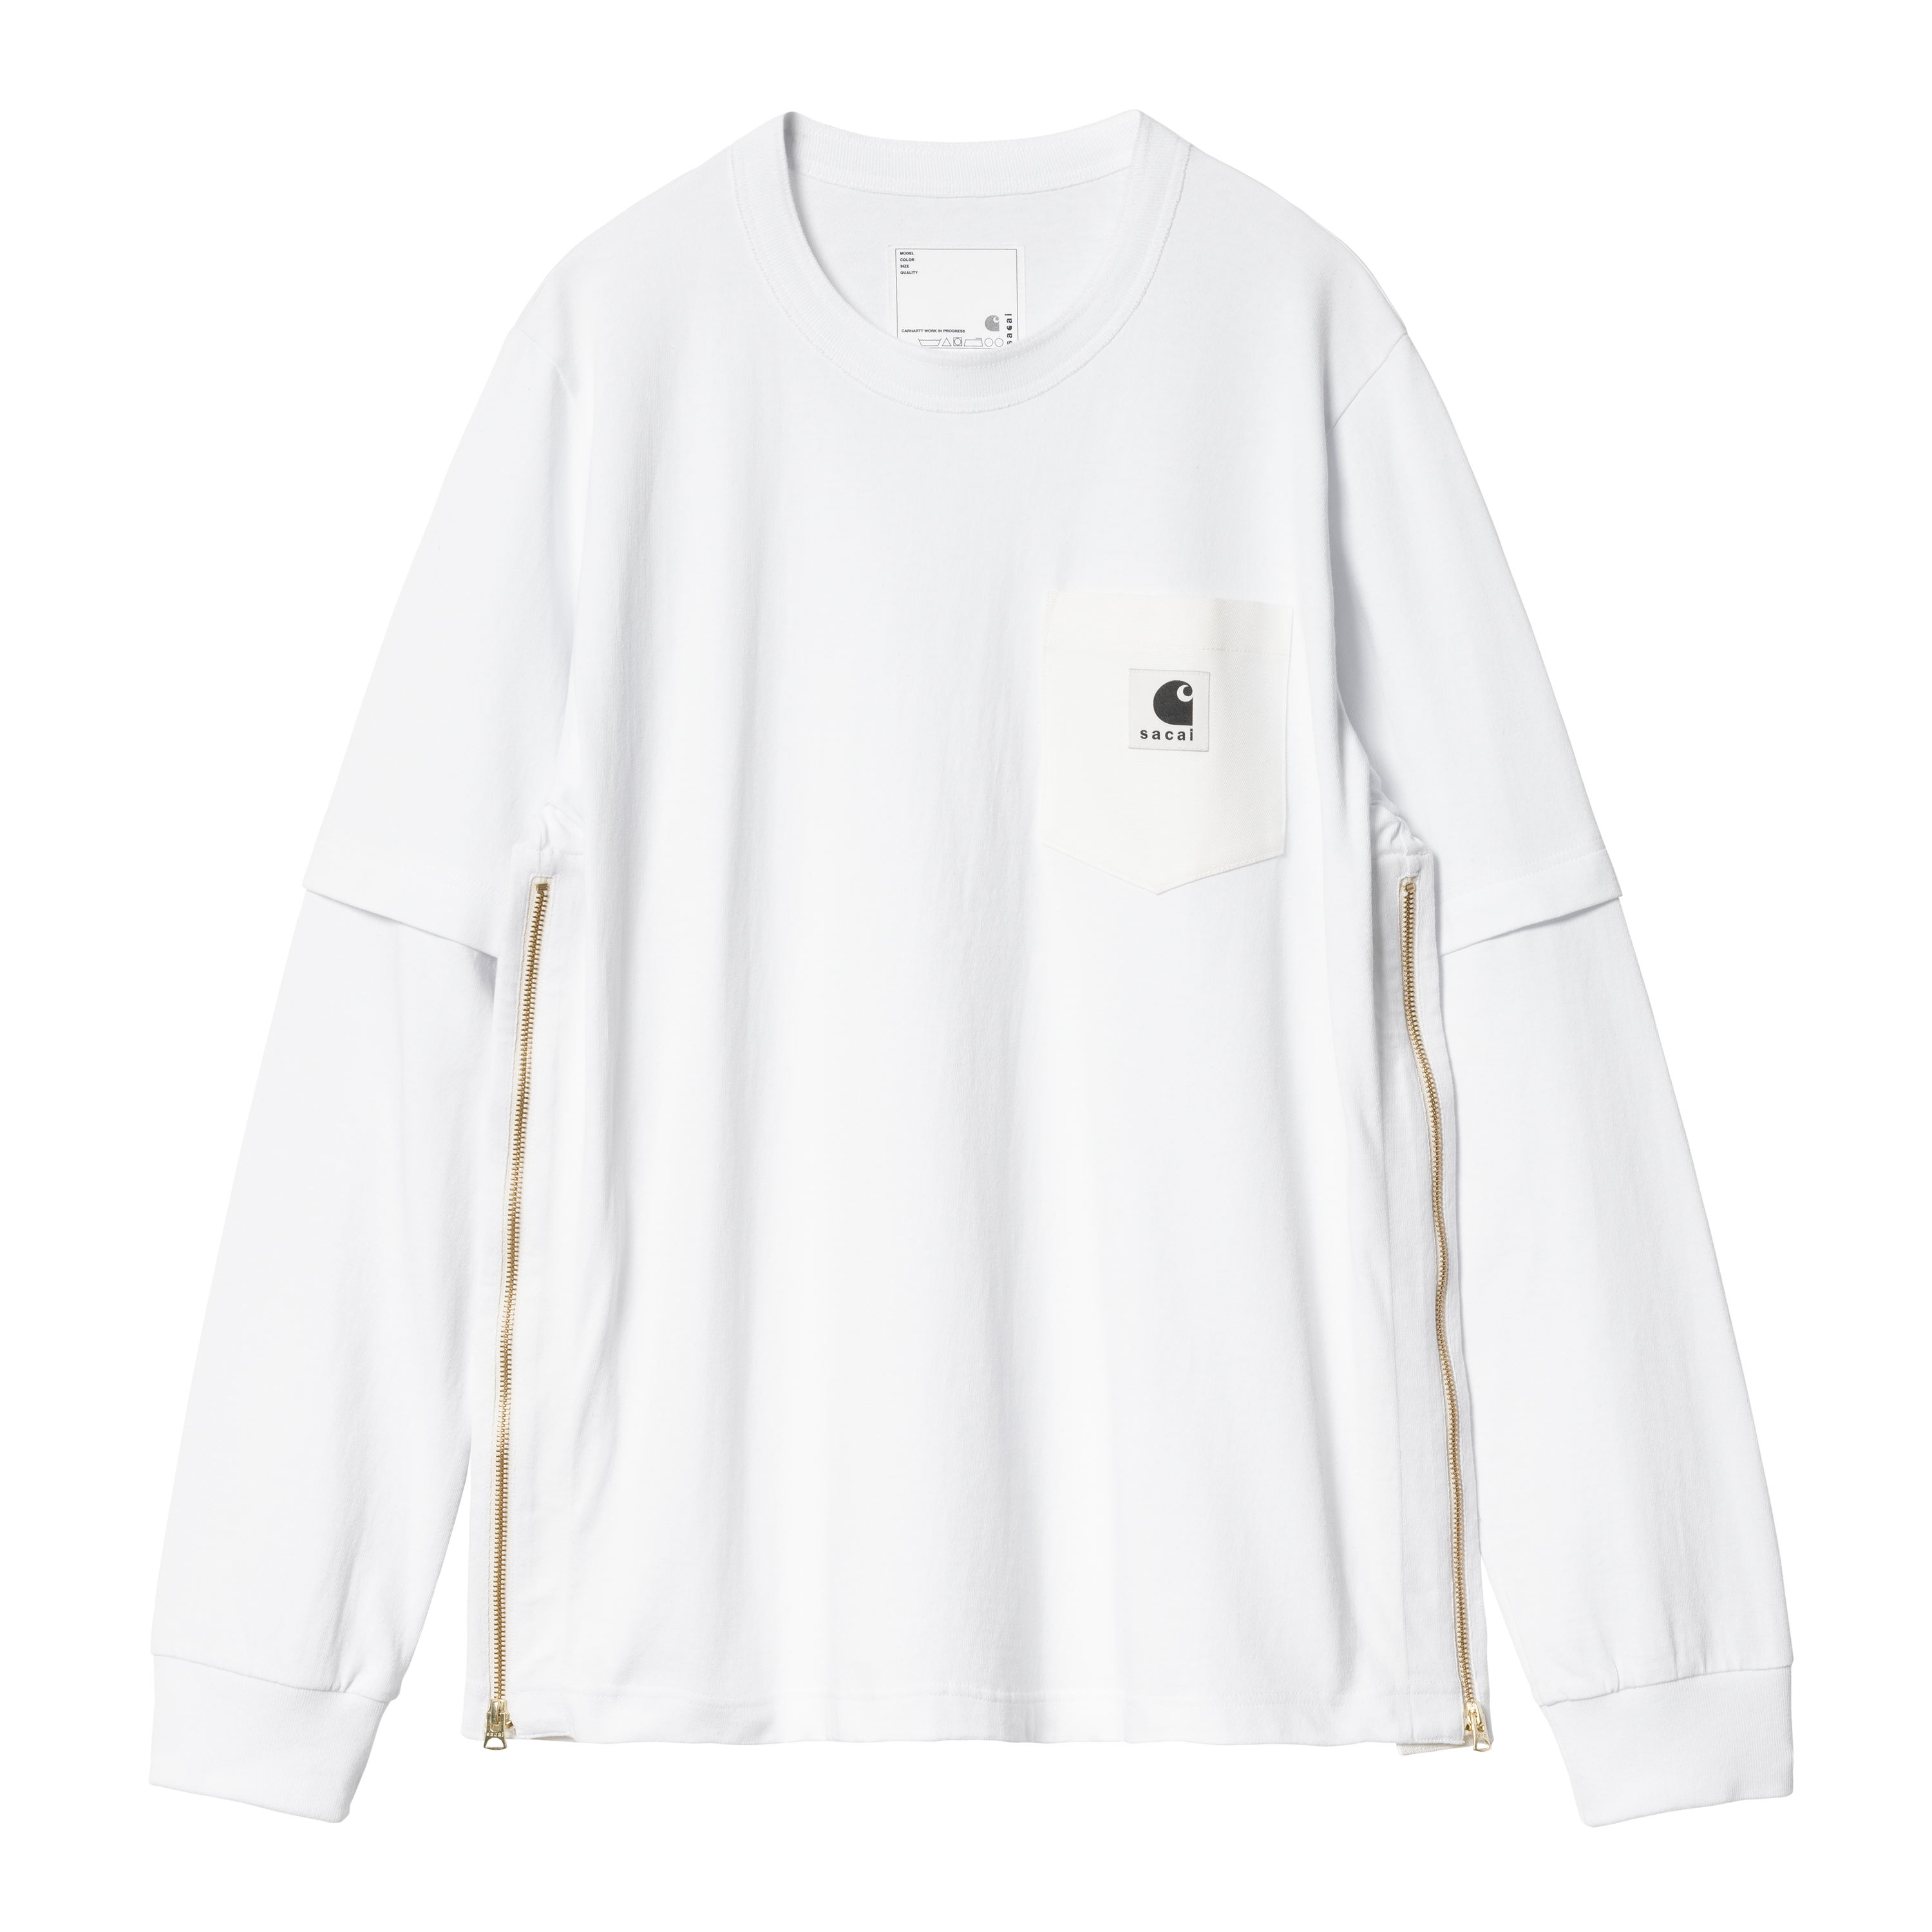 Carhartt WIP sacai x Carhartt WIP Long Sleeve T-Shirt in Weiß